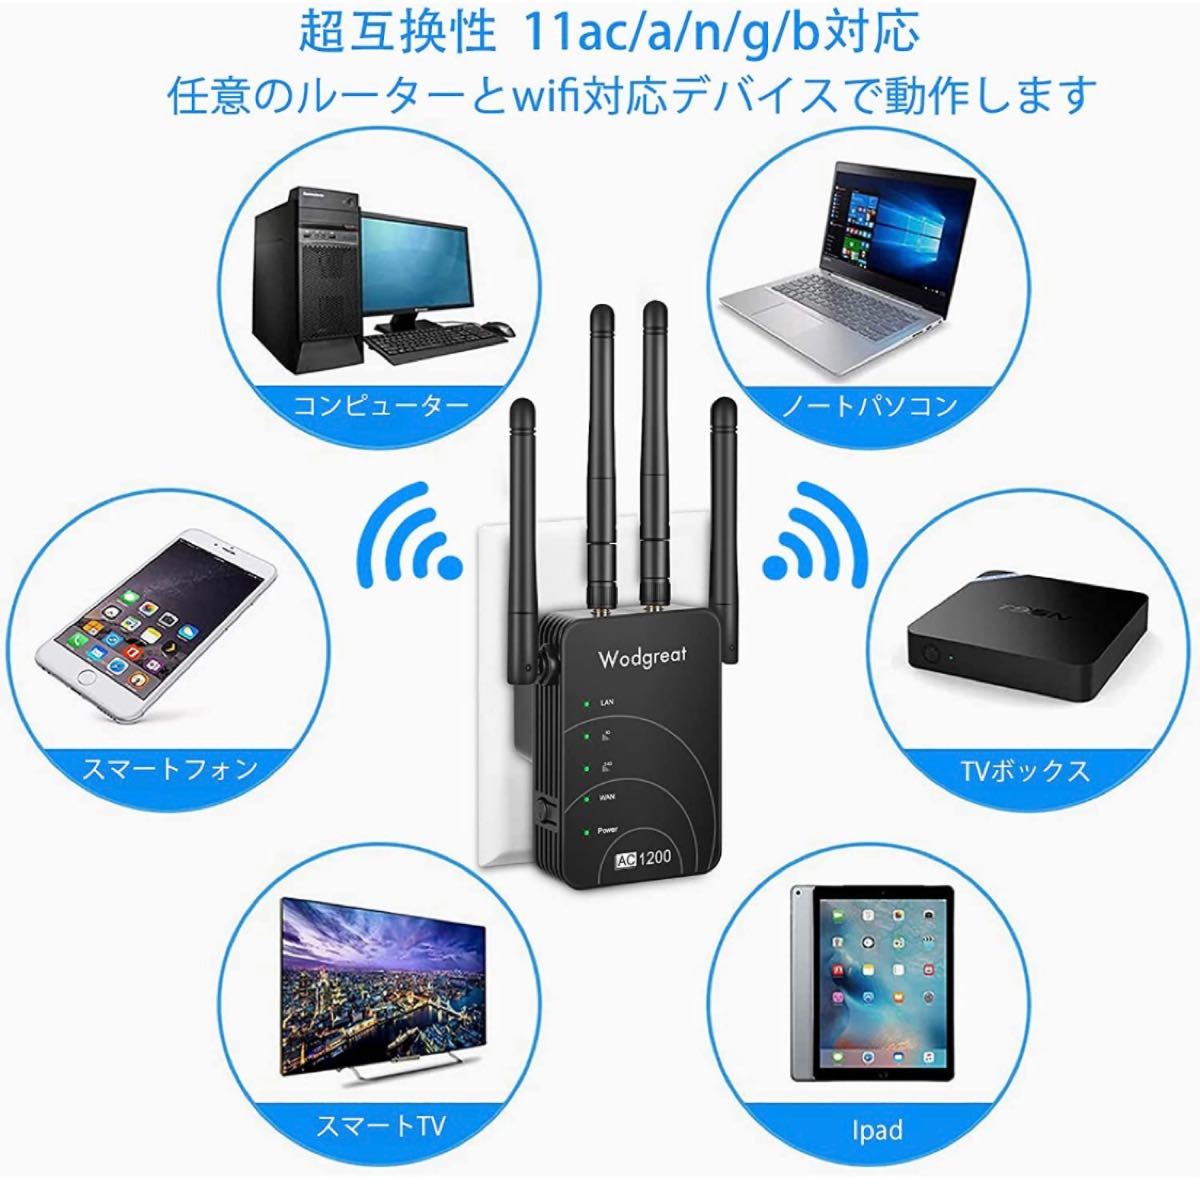 WiFi 無線LAN 中継器 ルーター コンセント直挿し